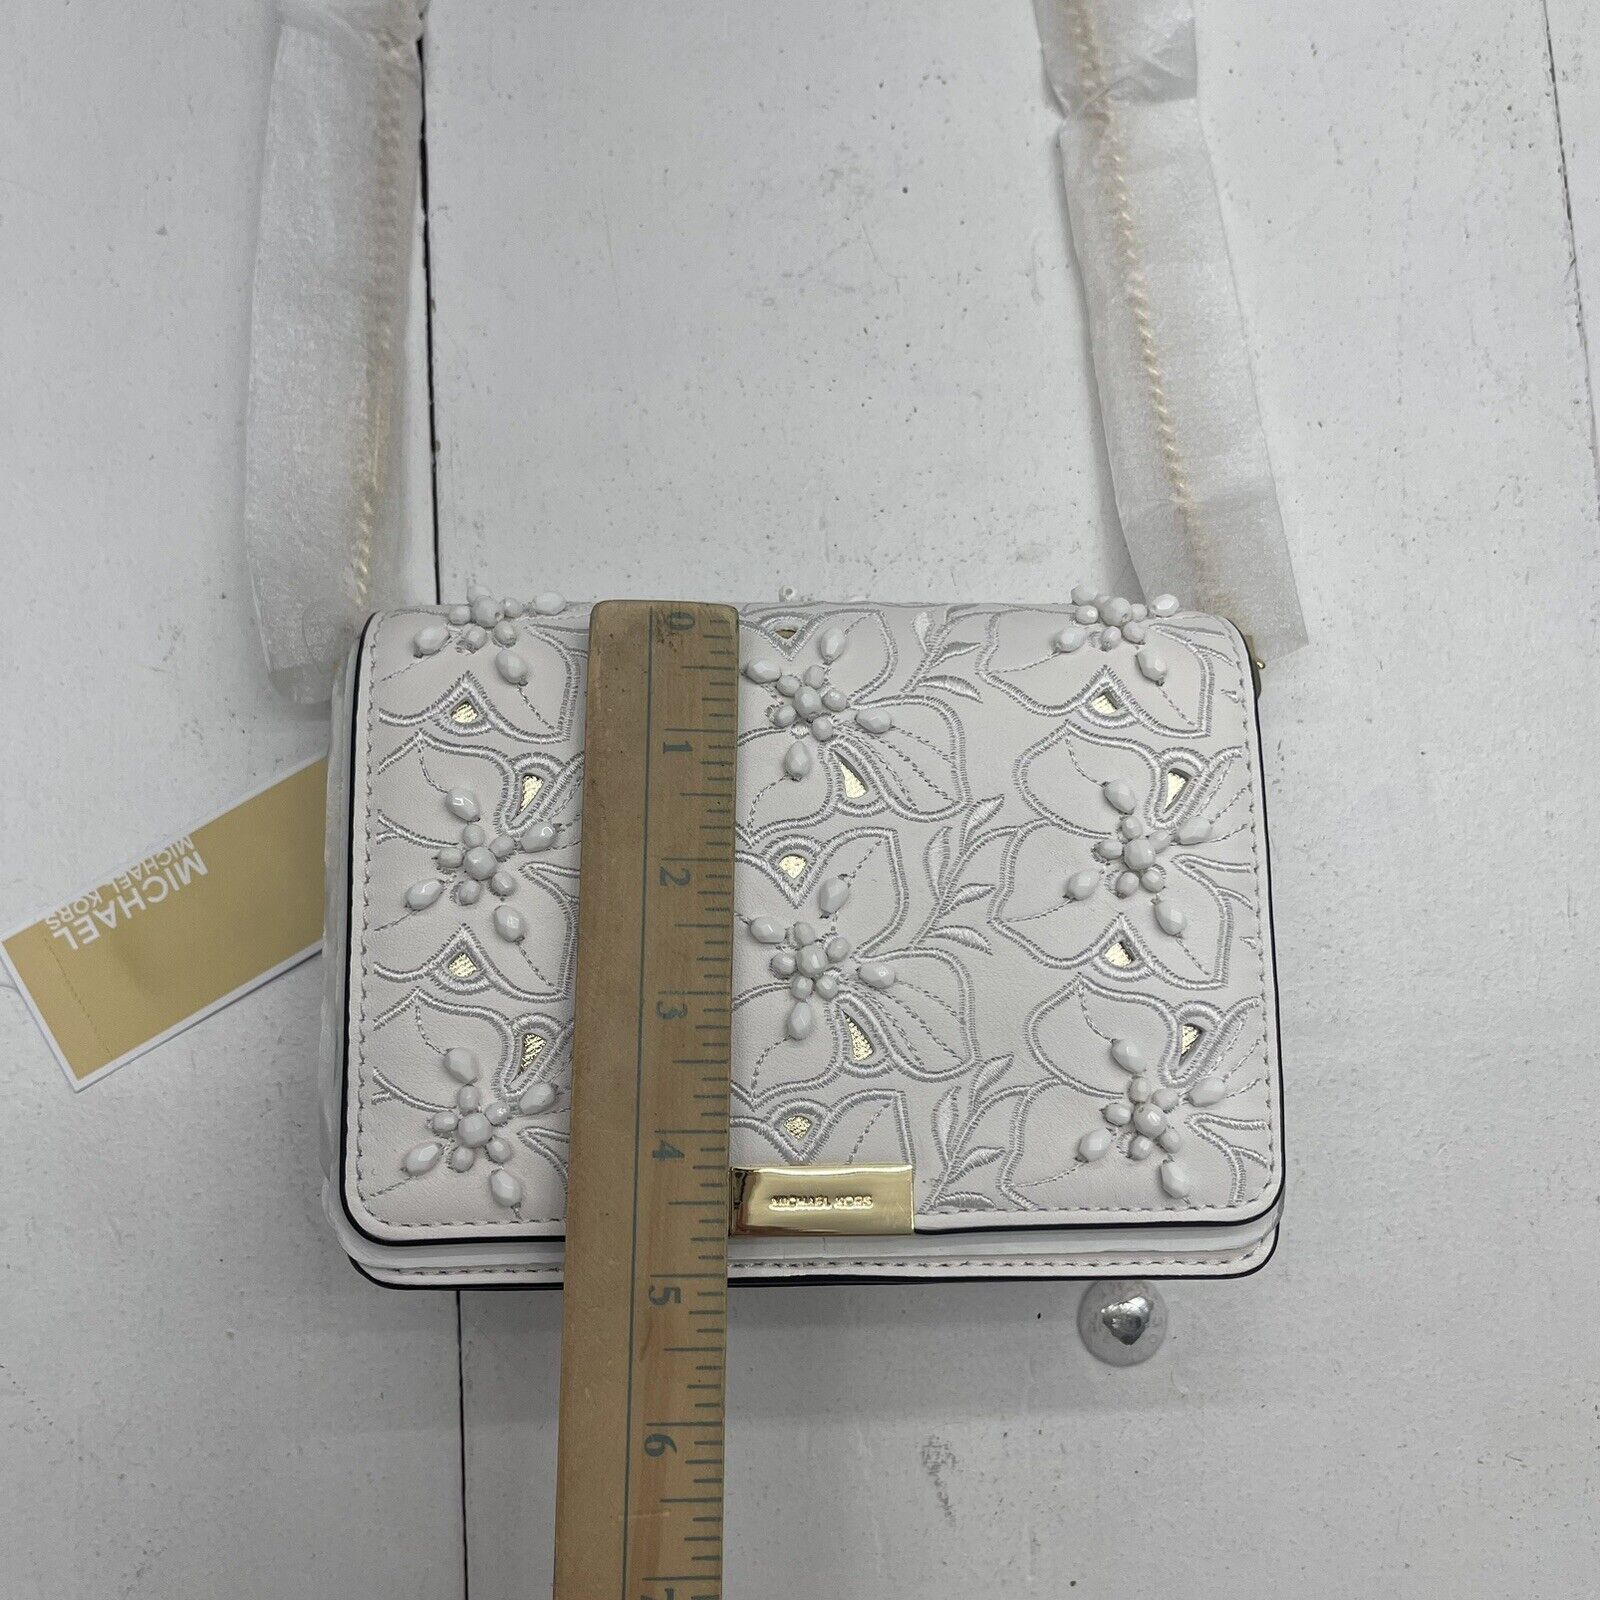 Michael Kors Jade Gusset Medium Clutch Crossbody White Embroidered